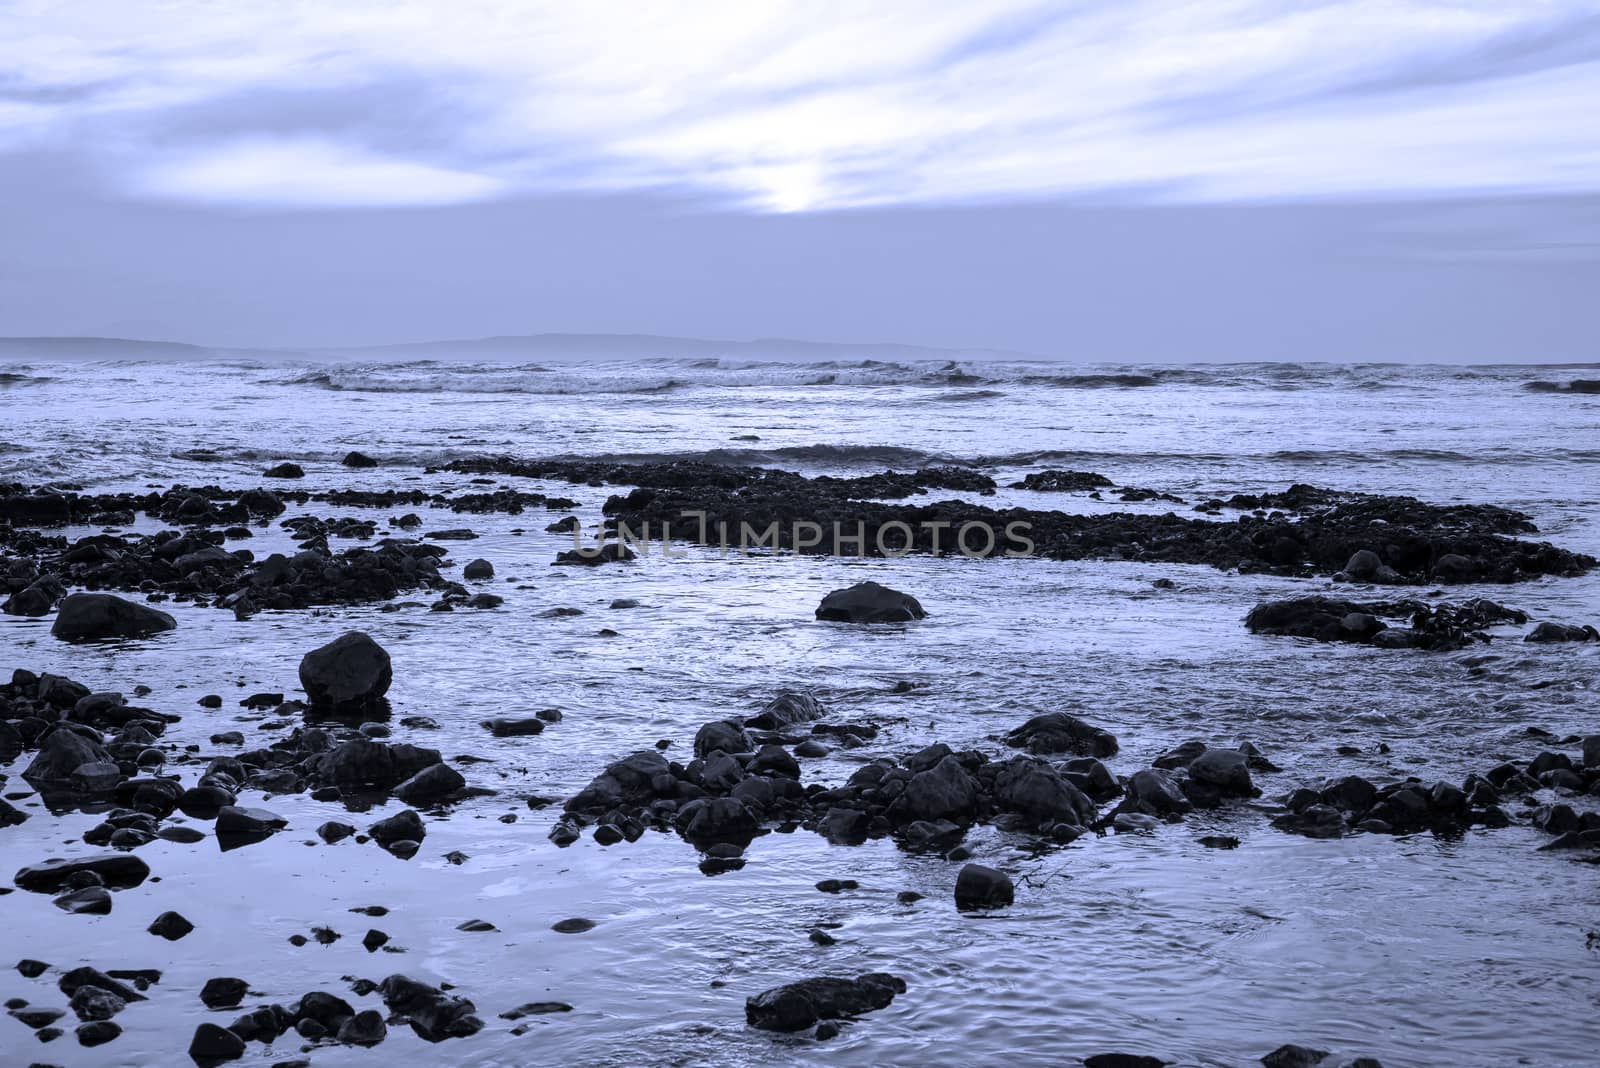 reflections at rocky beach near ballybunion on the wild atlantic way ireland with a beautiful blue tone